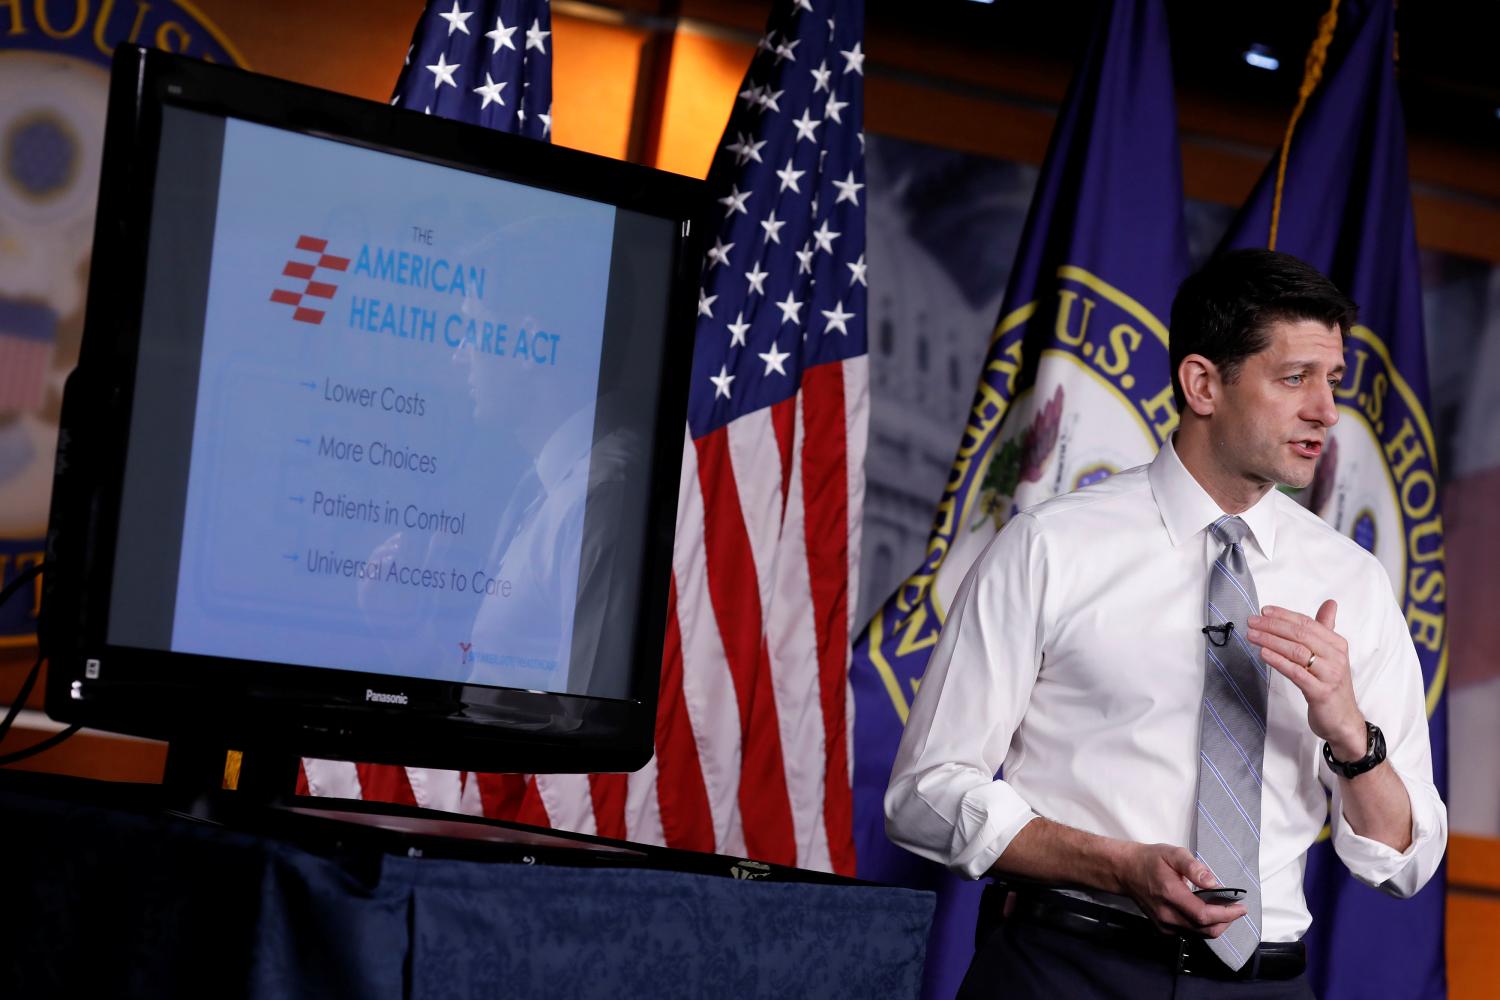 Paul Ryan presents on healthcare